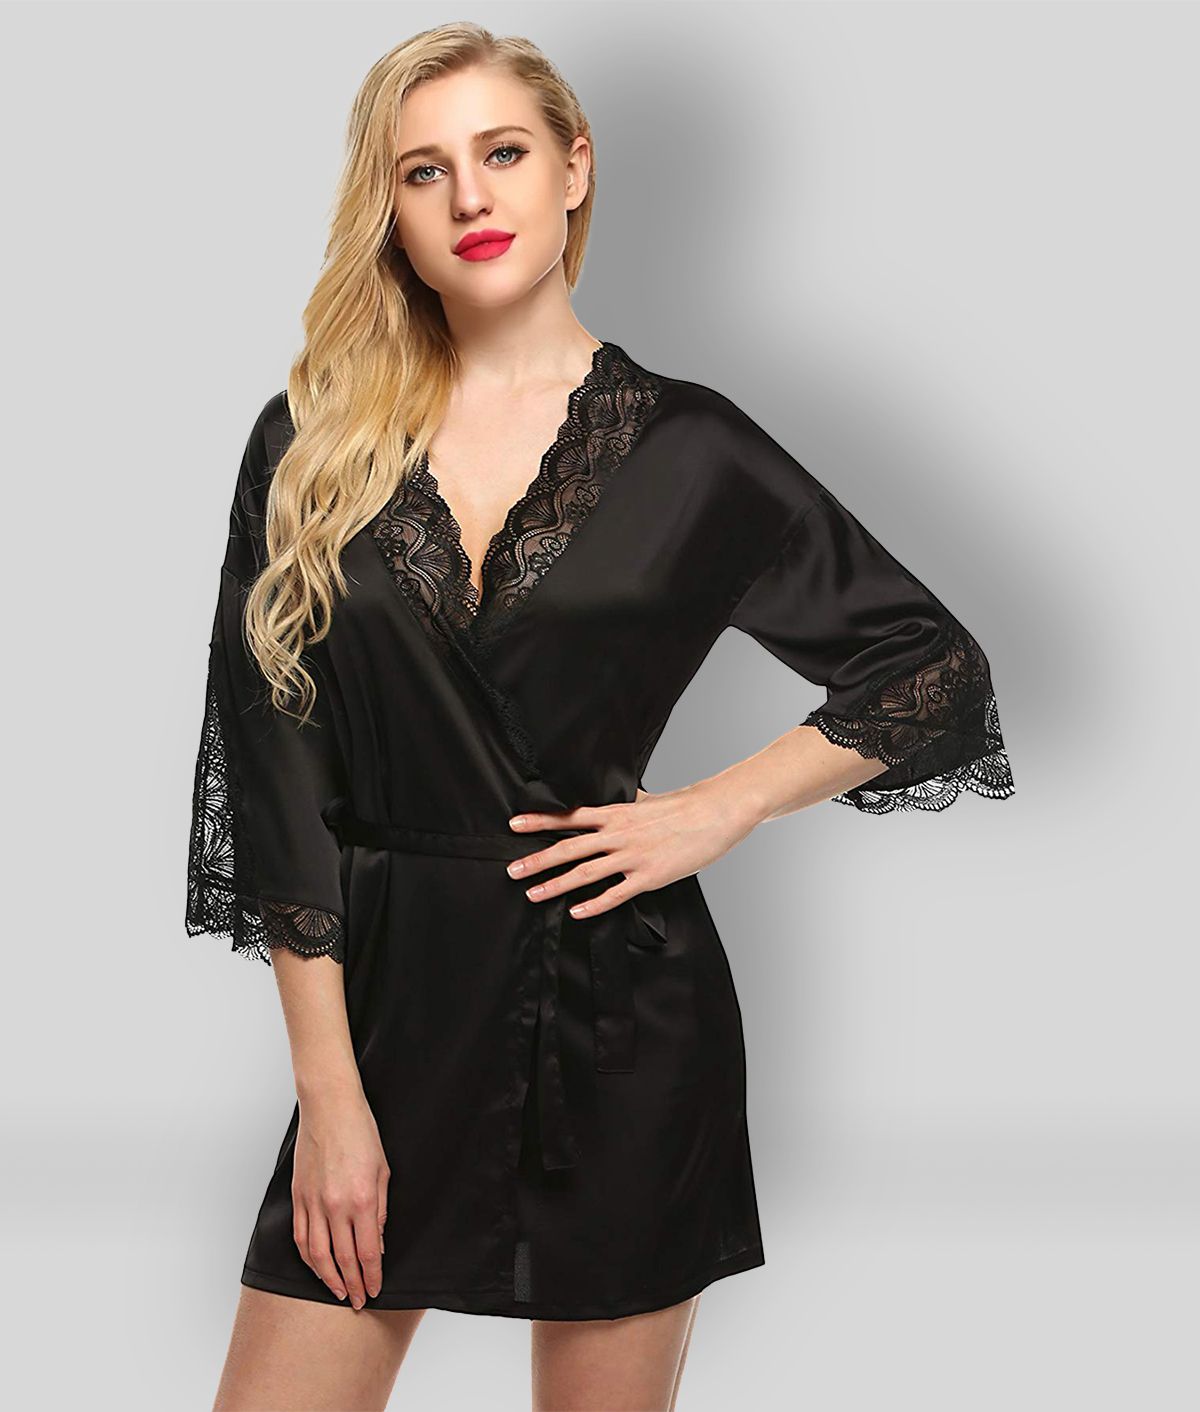     			Celosia - Black Satin Women's Nightwear Robes ( Pack of 1 )